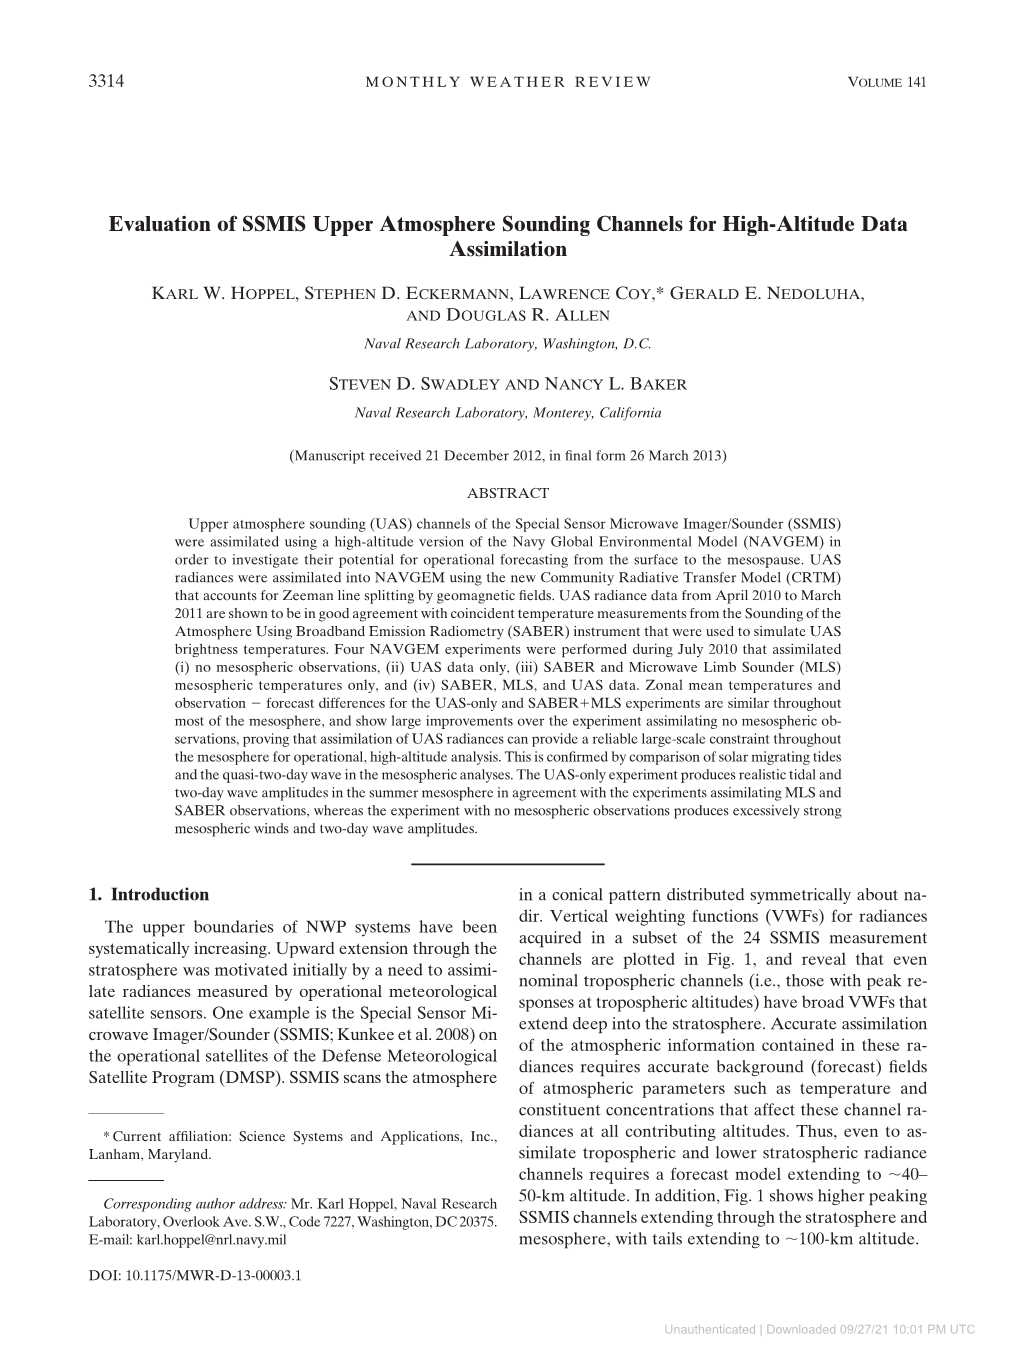 Evaluation of SSMIS Upper Atmosphere Sounding Channels for High-Altitude Data Assimilation